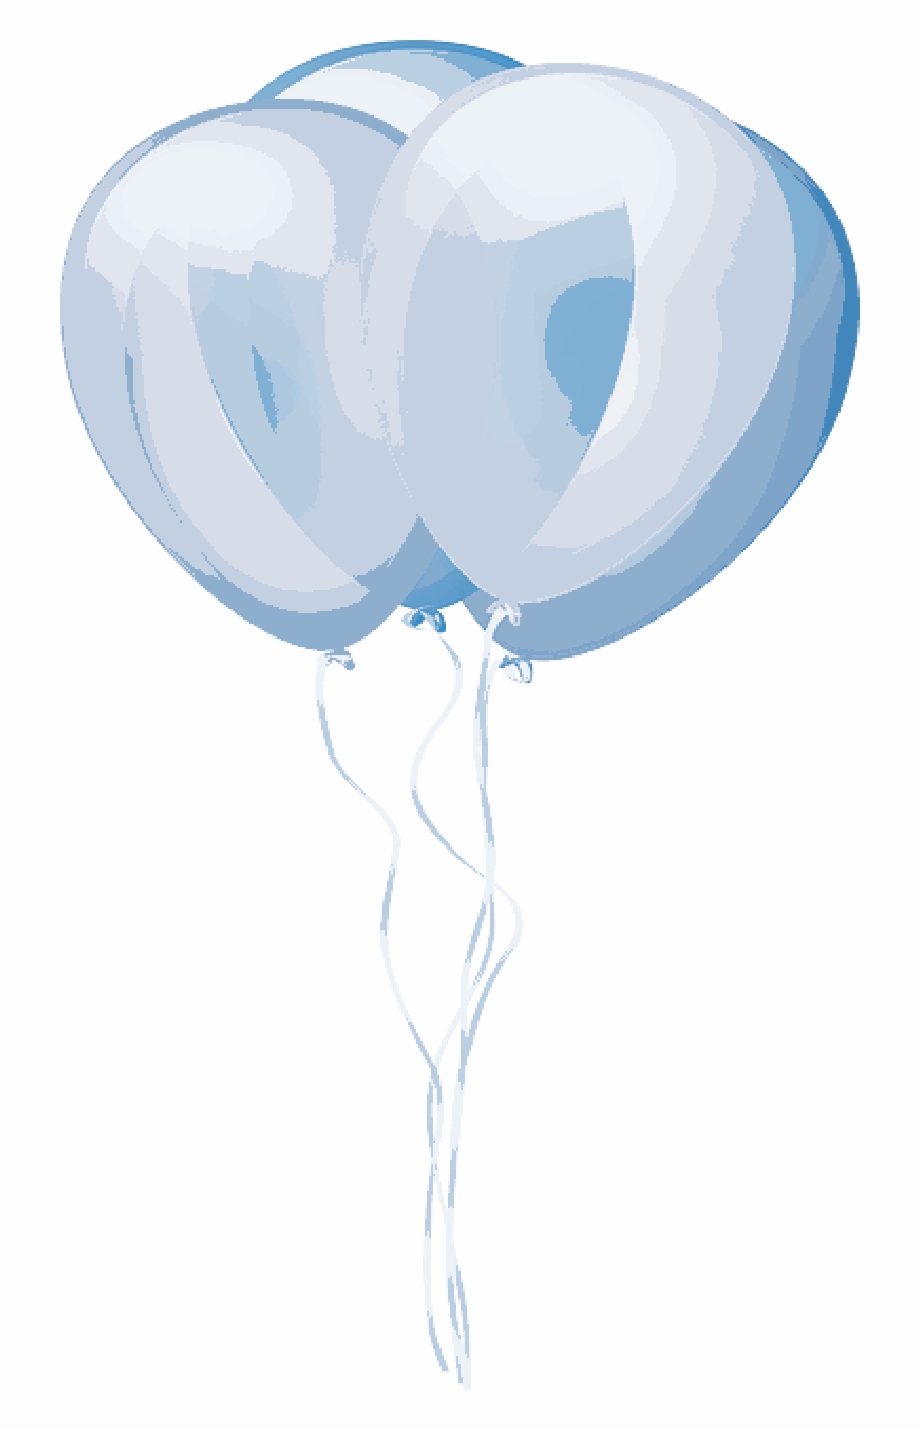 Balloon Party Celebration Transparent Illustration